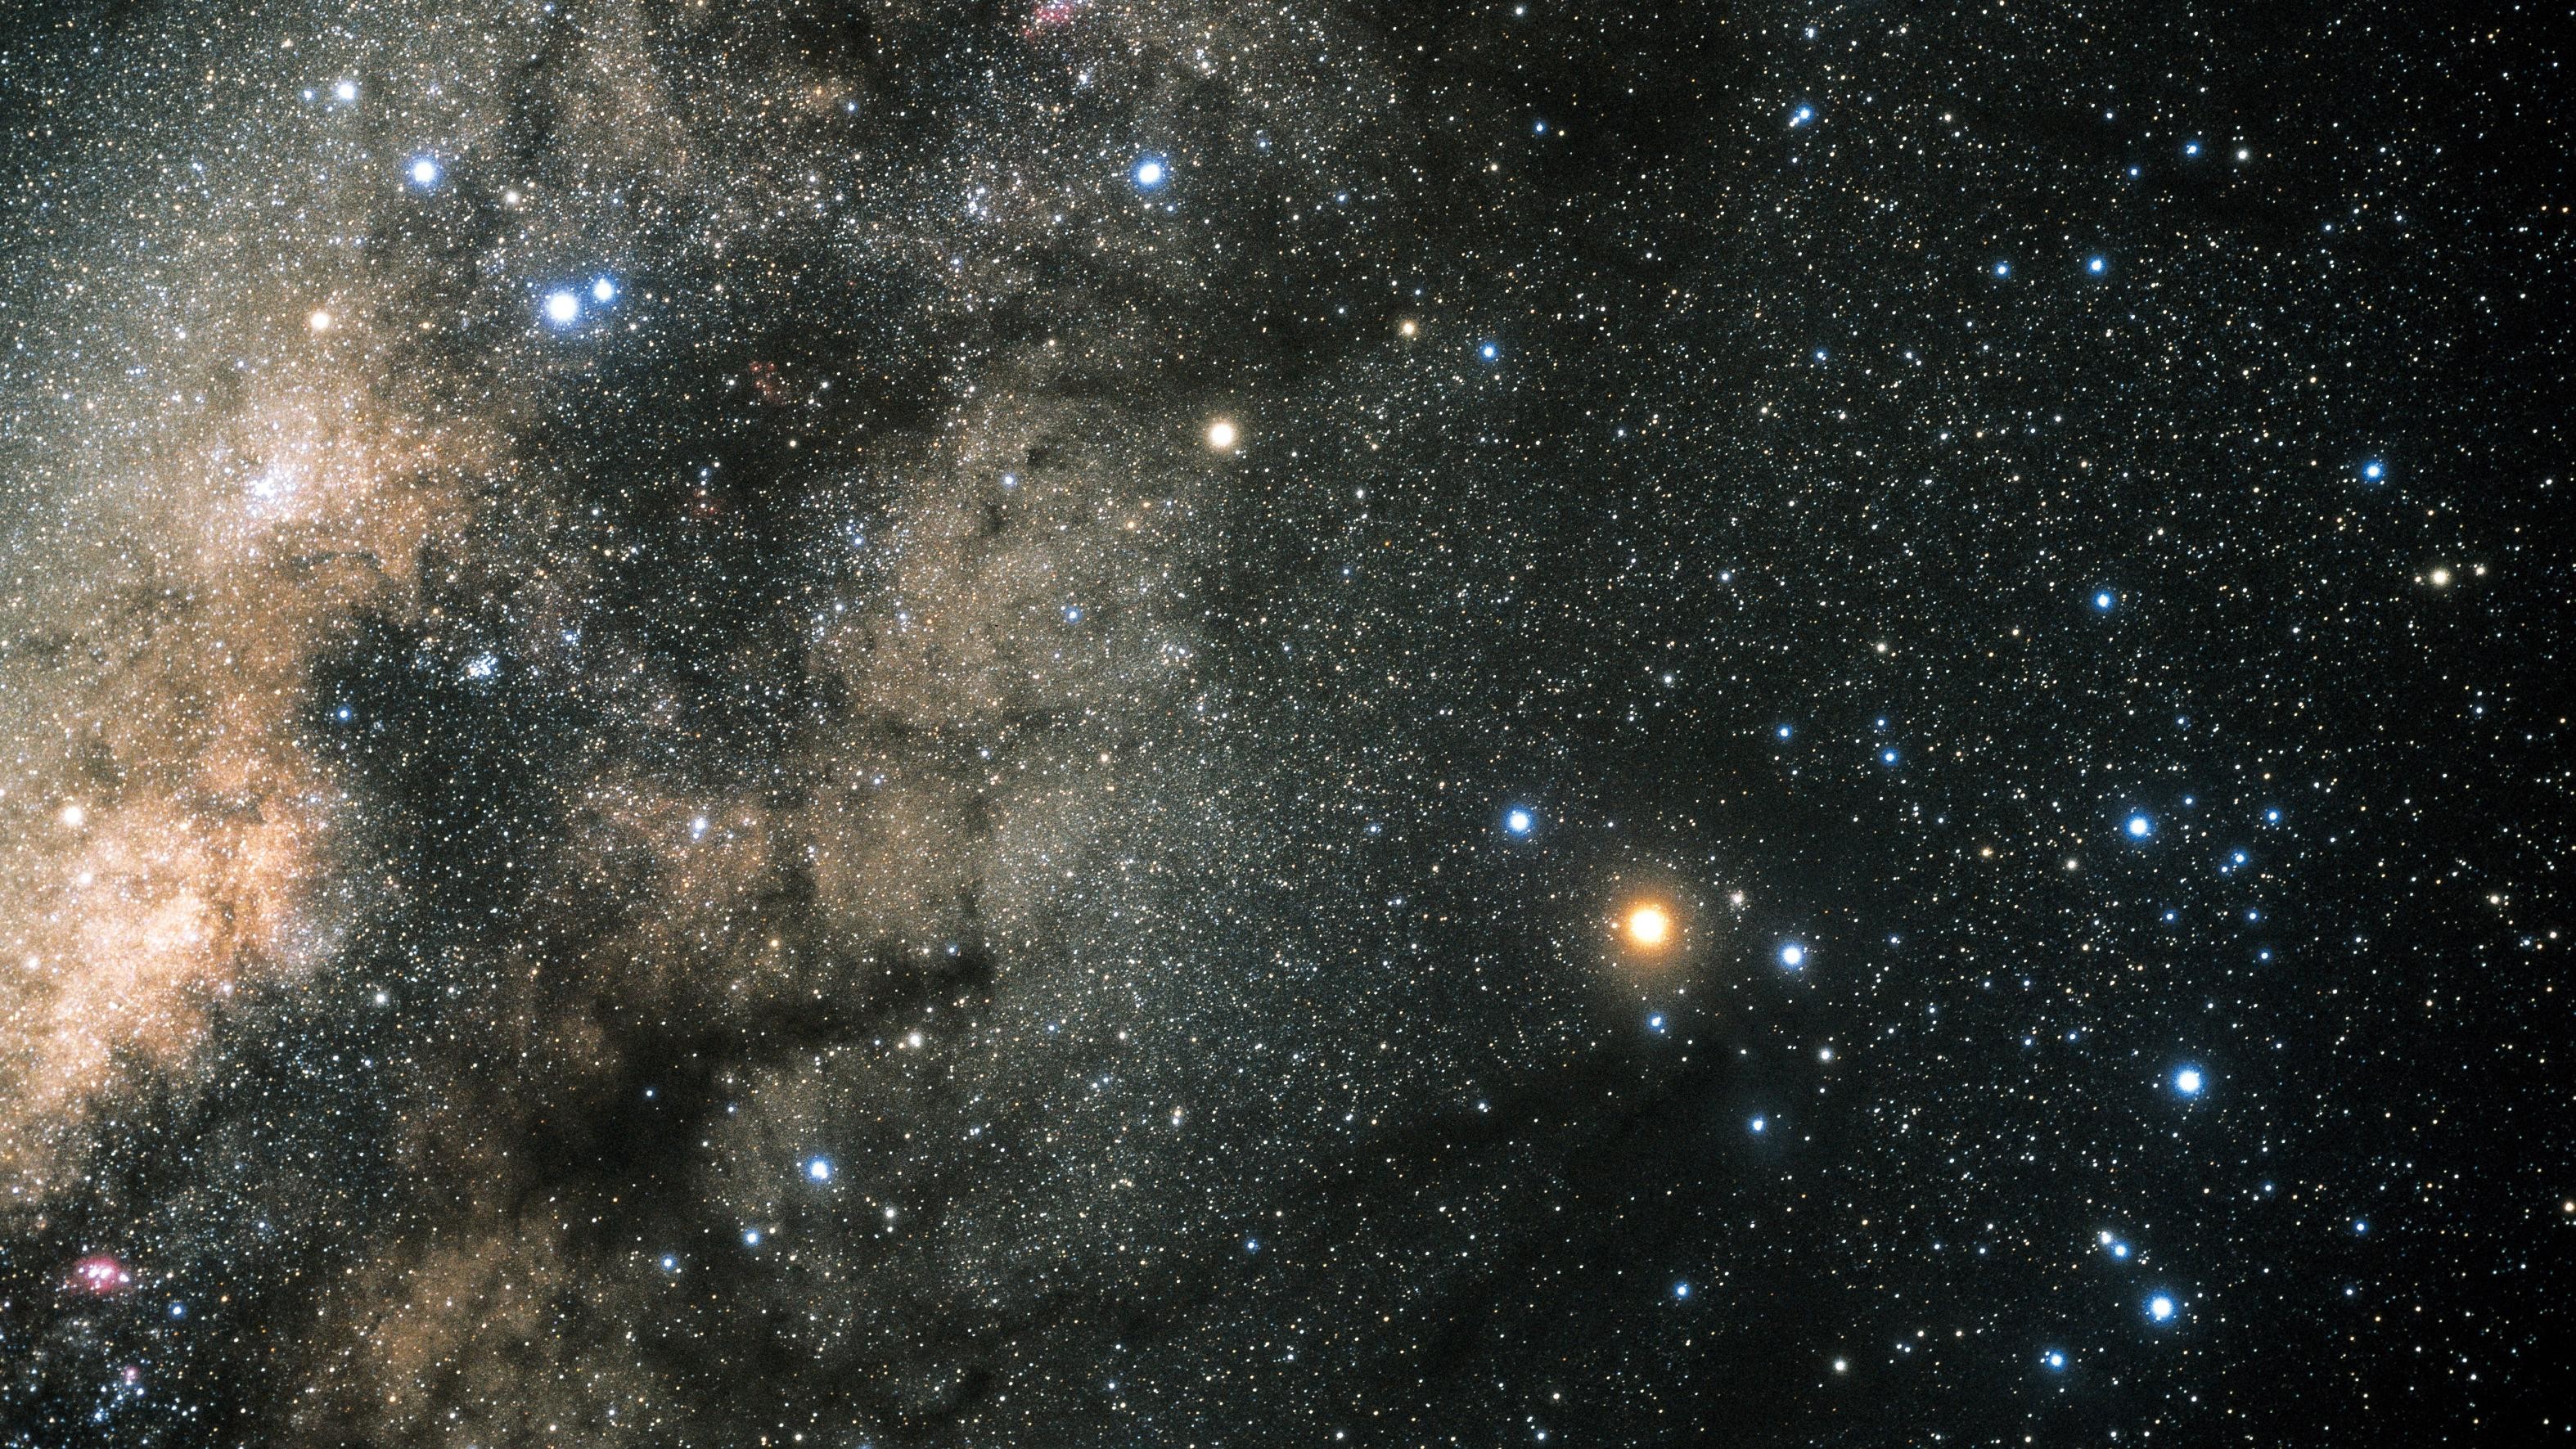 3148x1771 Star field of Constellation Scorpius Desktop Wallpaper